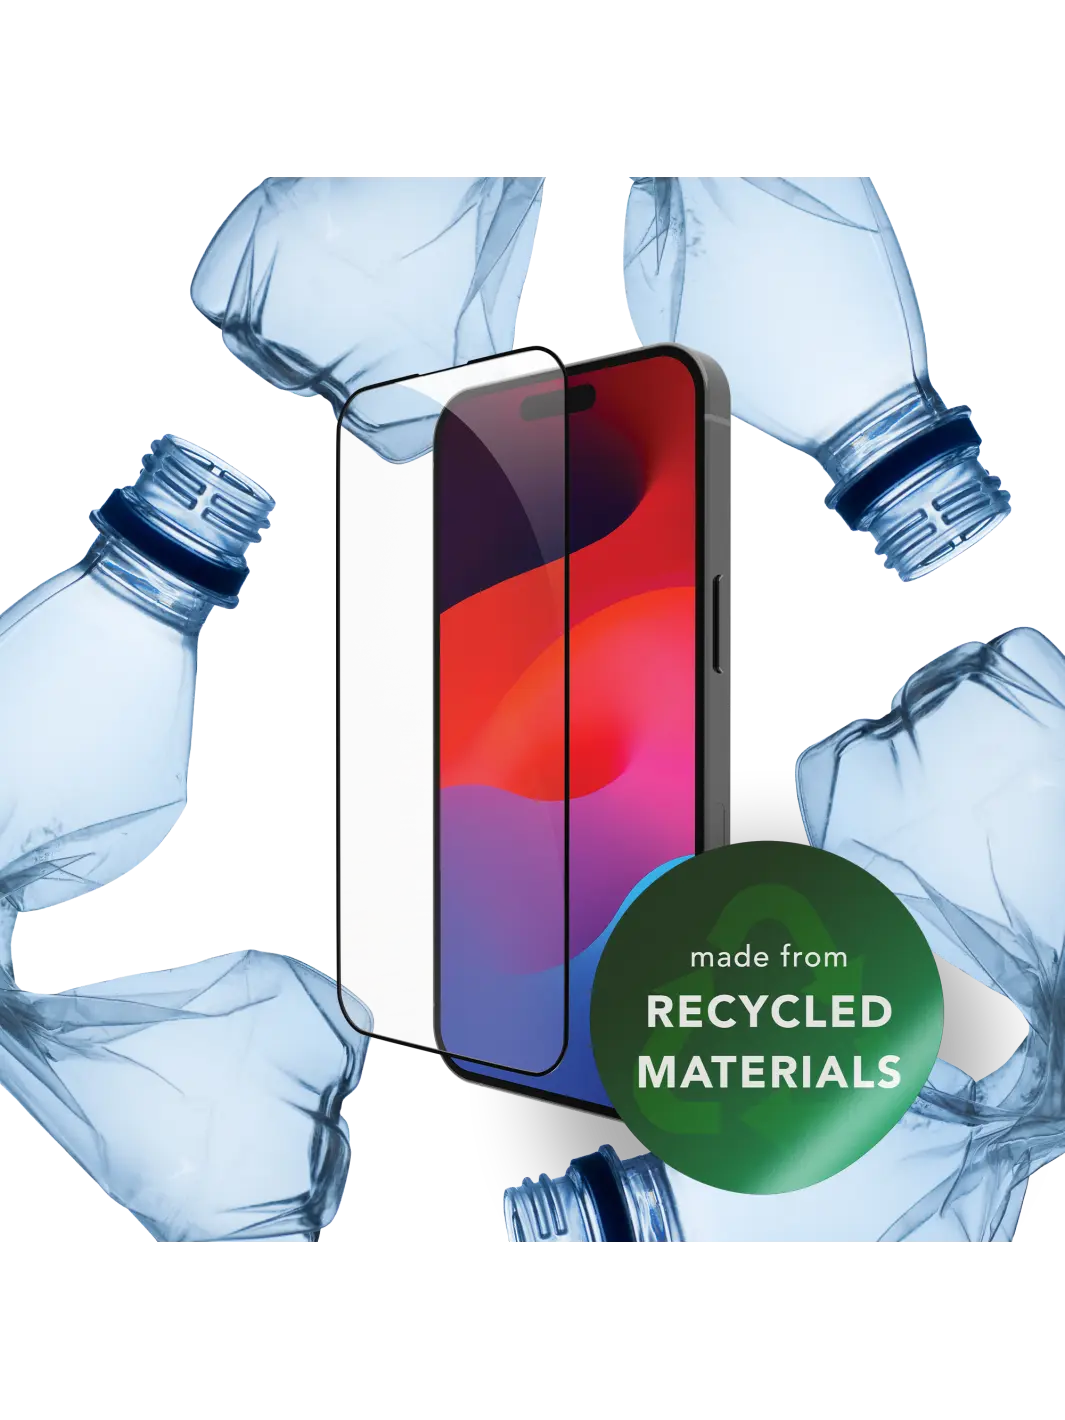 eco-shield - Phones iPhone 15 Pro Max Phone Cases